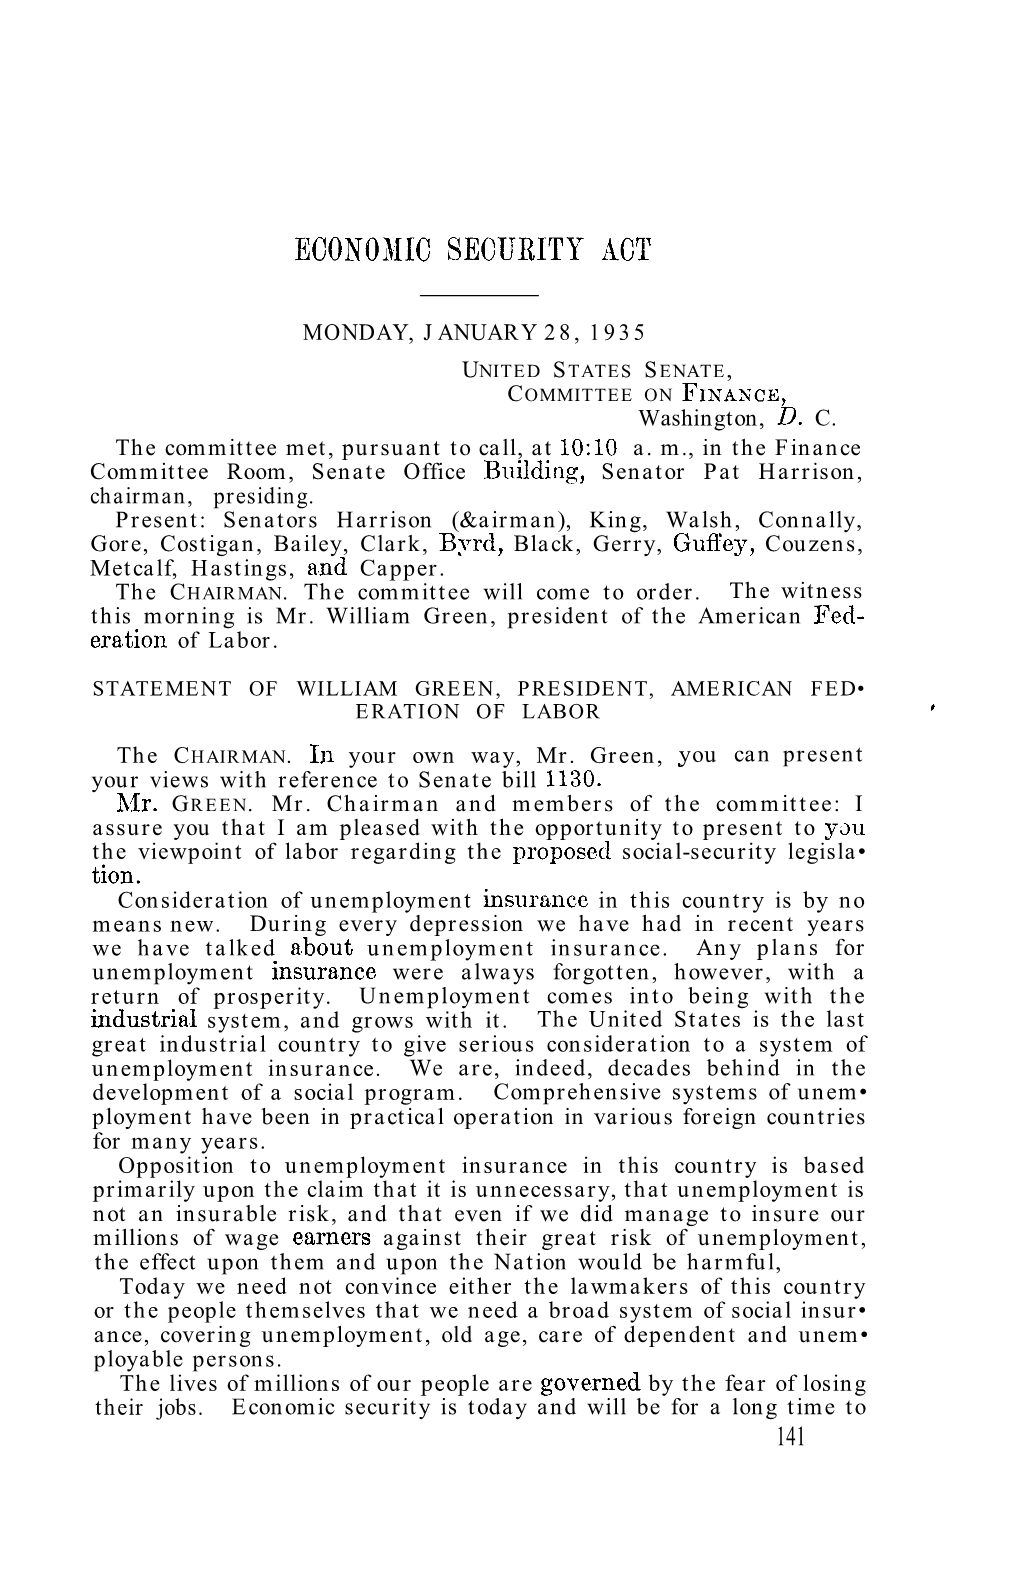 MONDAY, JANUARY 28, 1935 Washington, C. the Committee Met